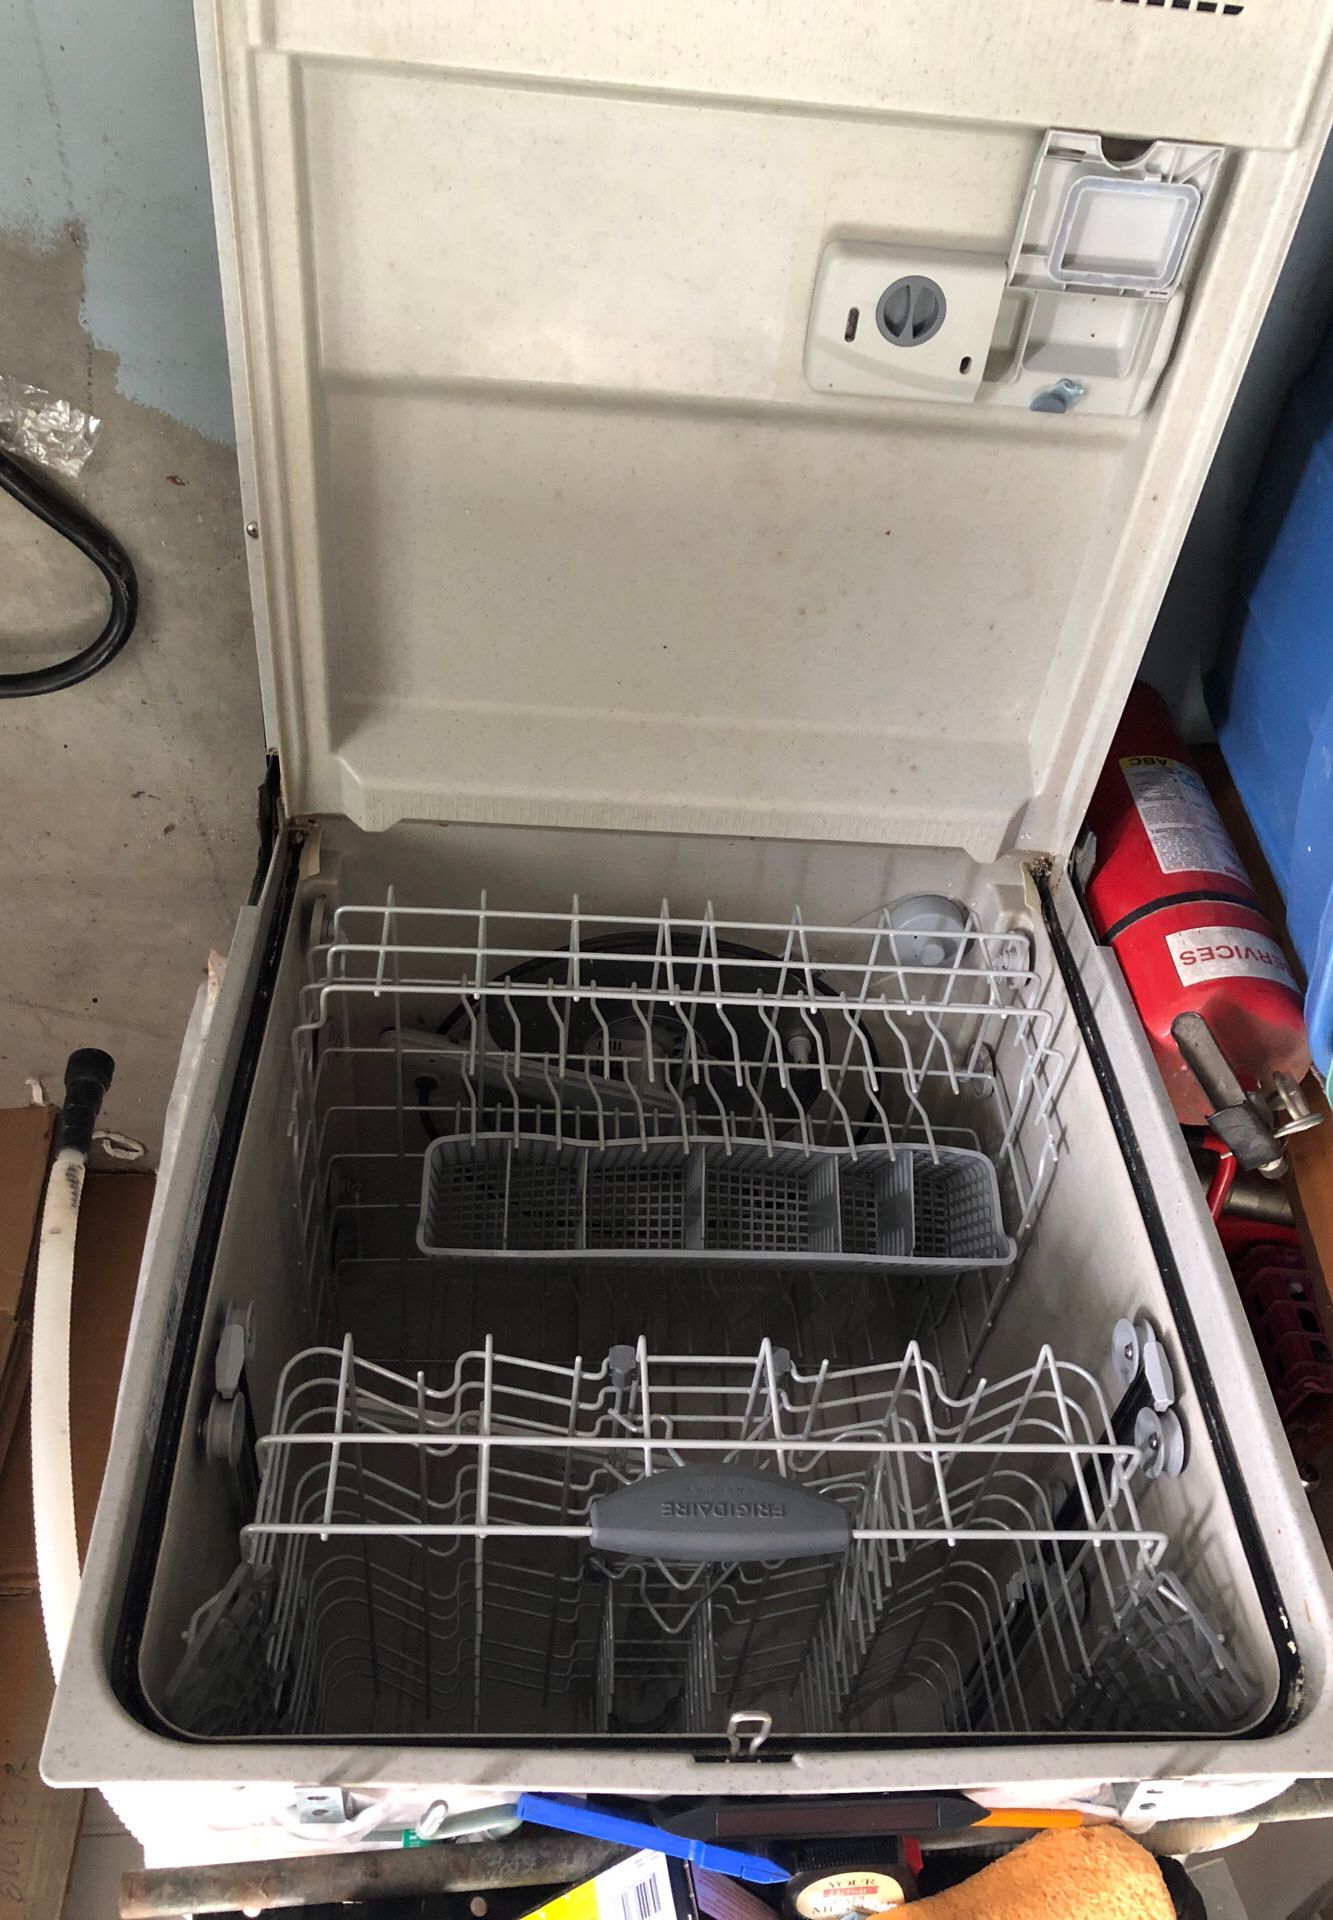 Dishwasher and electric range